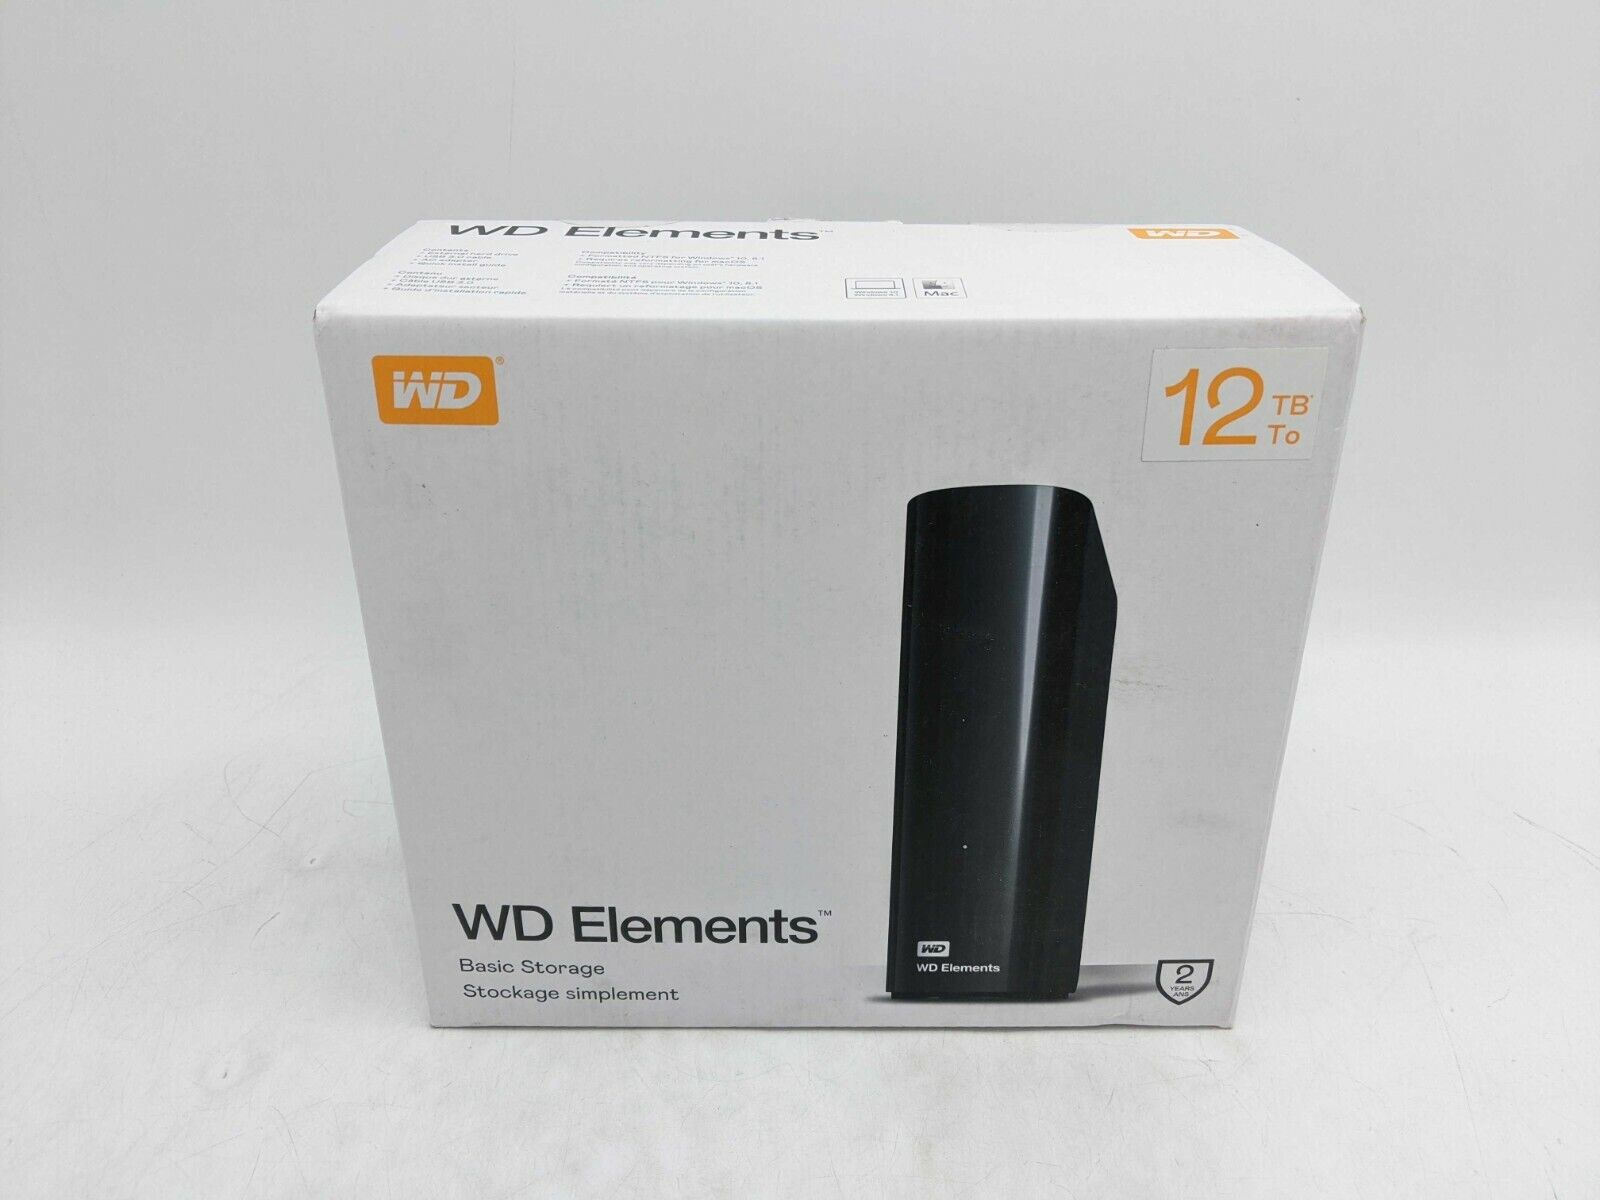 Western Digital WD Elements Basic Storage 12TB External Hard Drive -JL1518